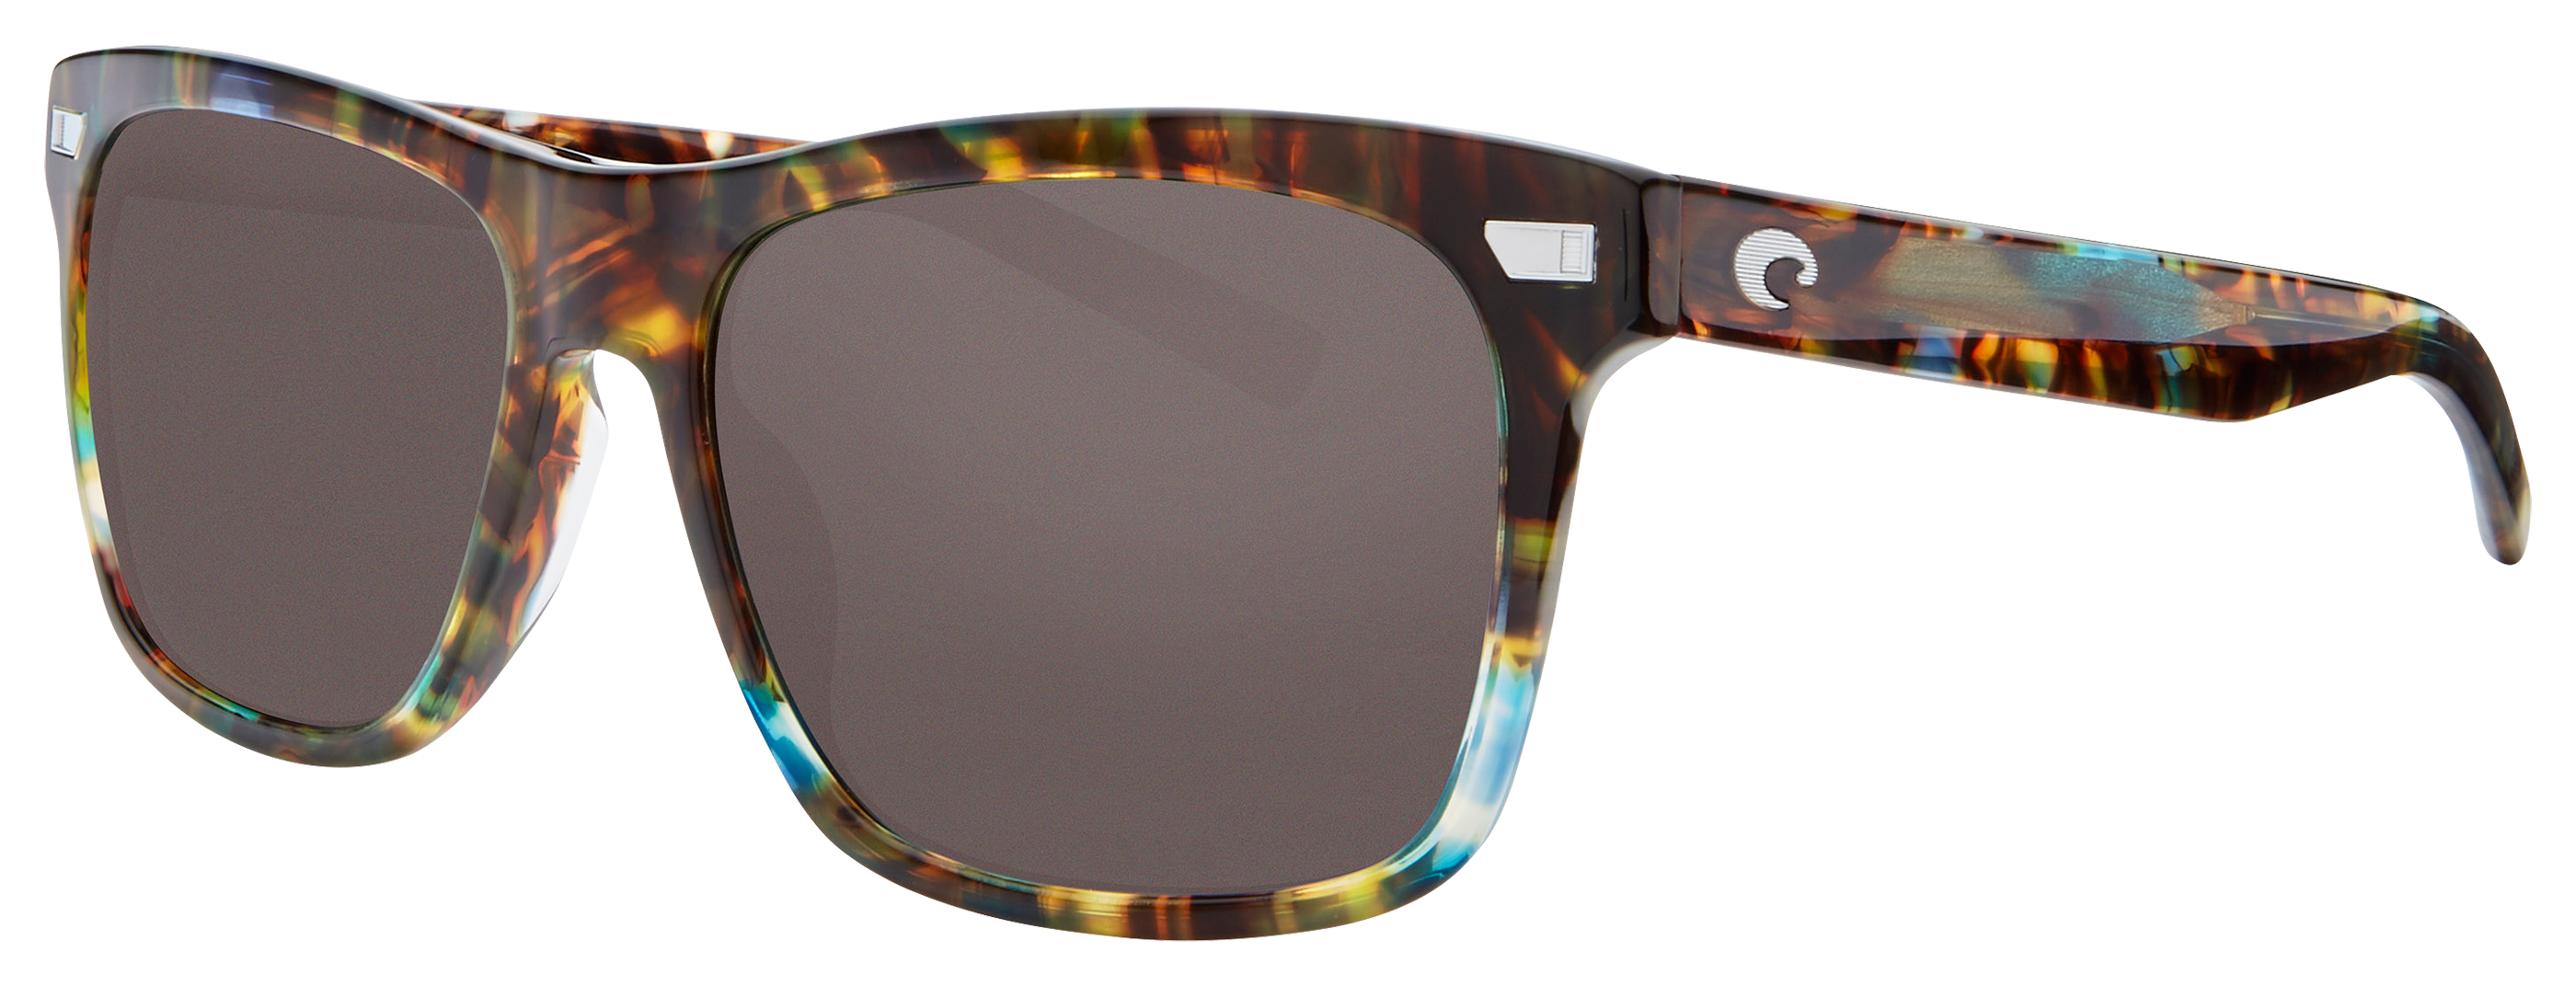 Costa Aransas 580G Polarized Sunglasses - Shiny Ocean Tortoise/Gray - Large -  Costa Del Mar